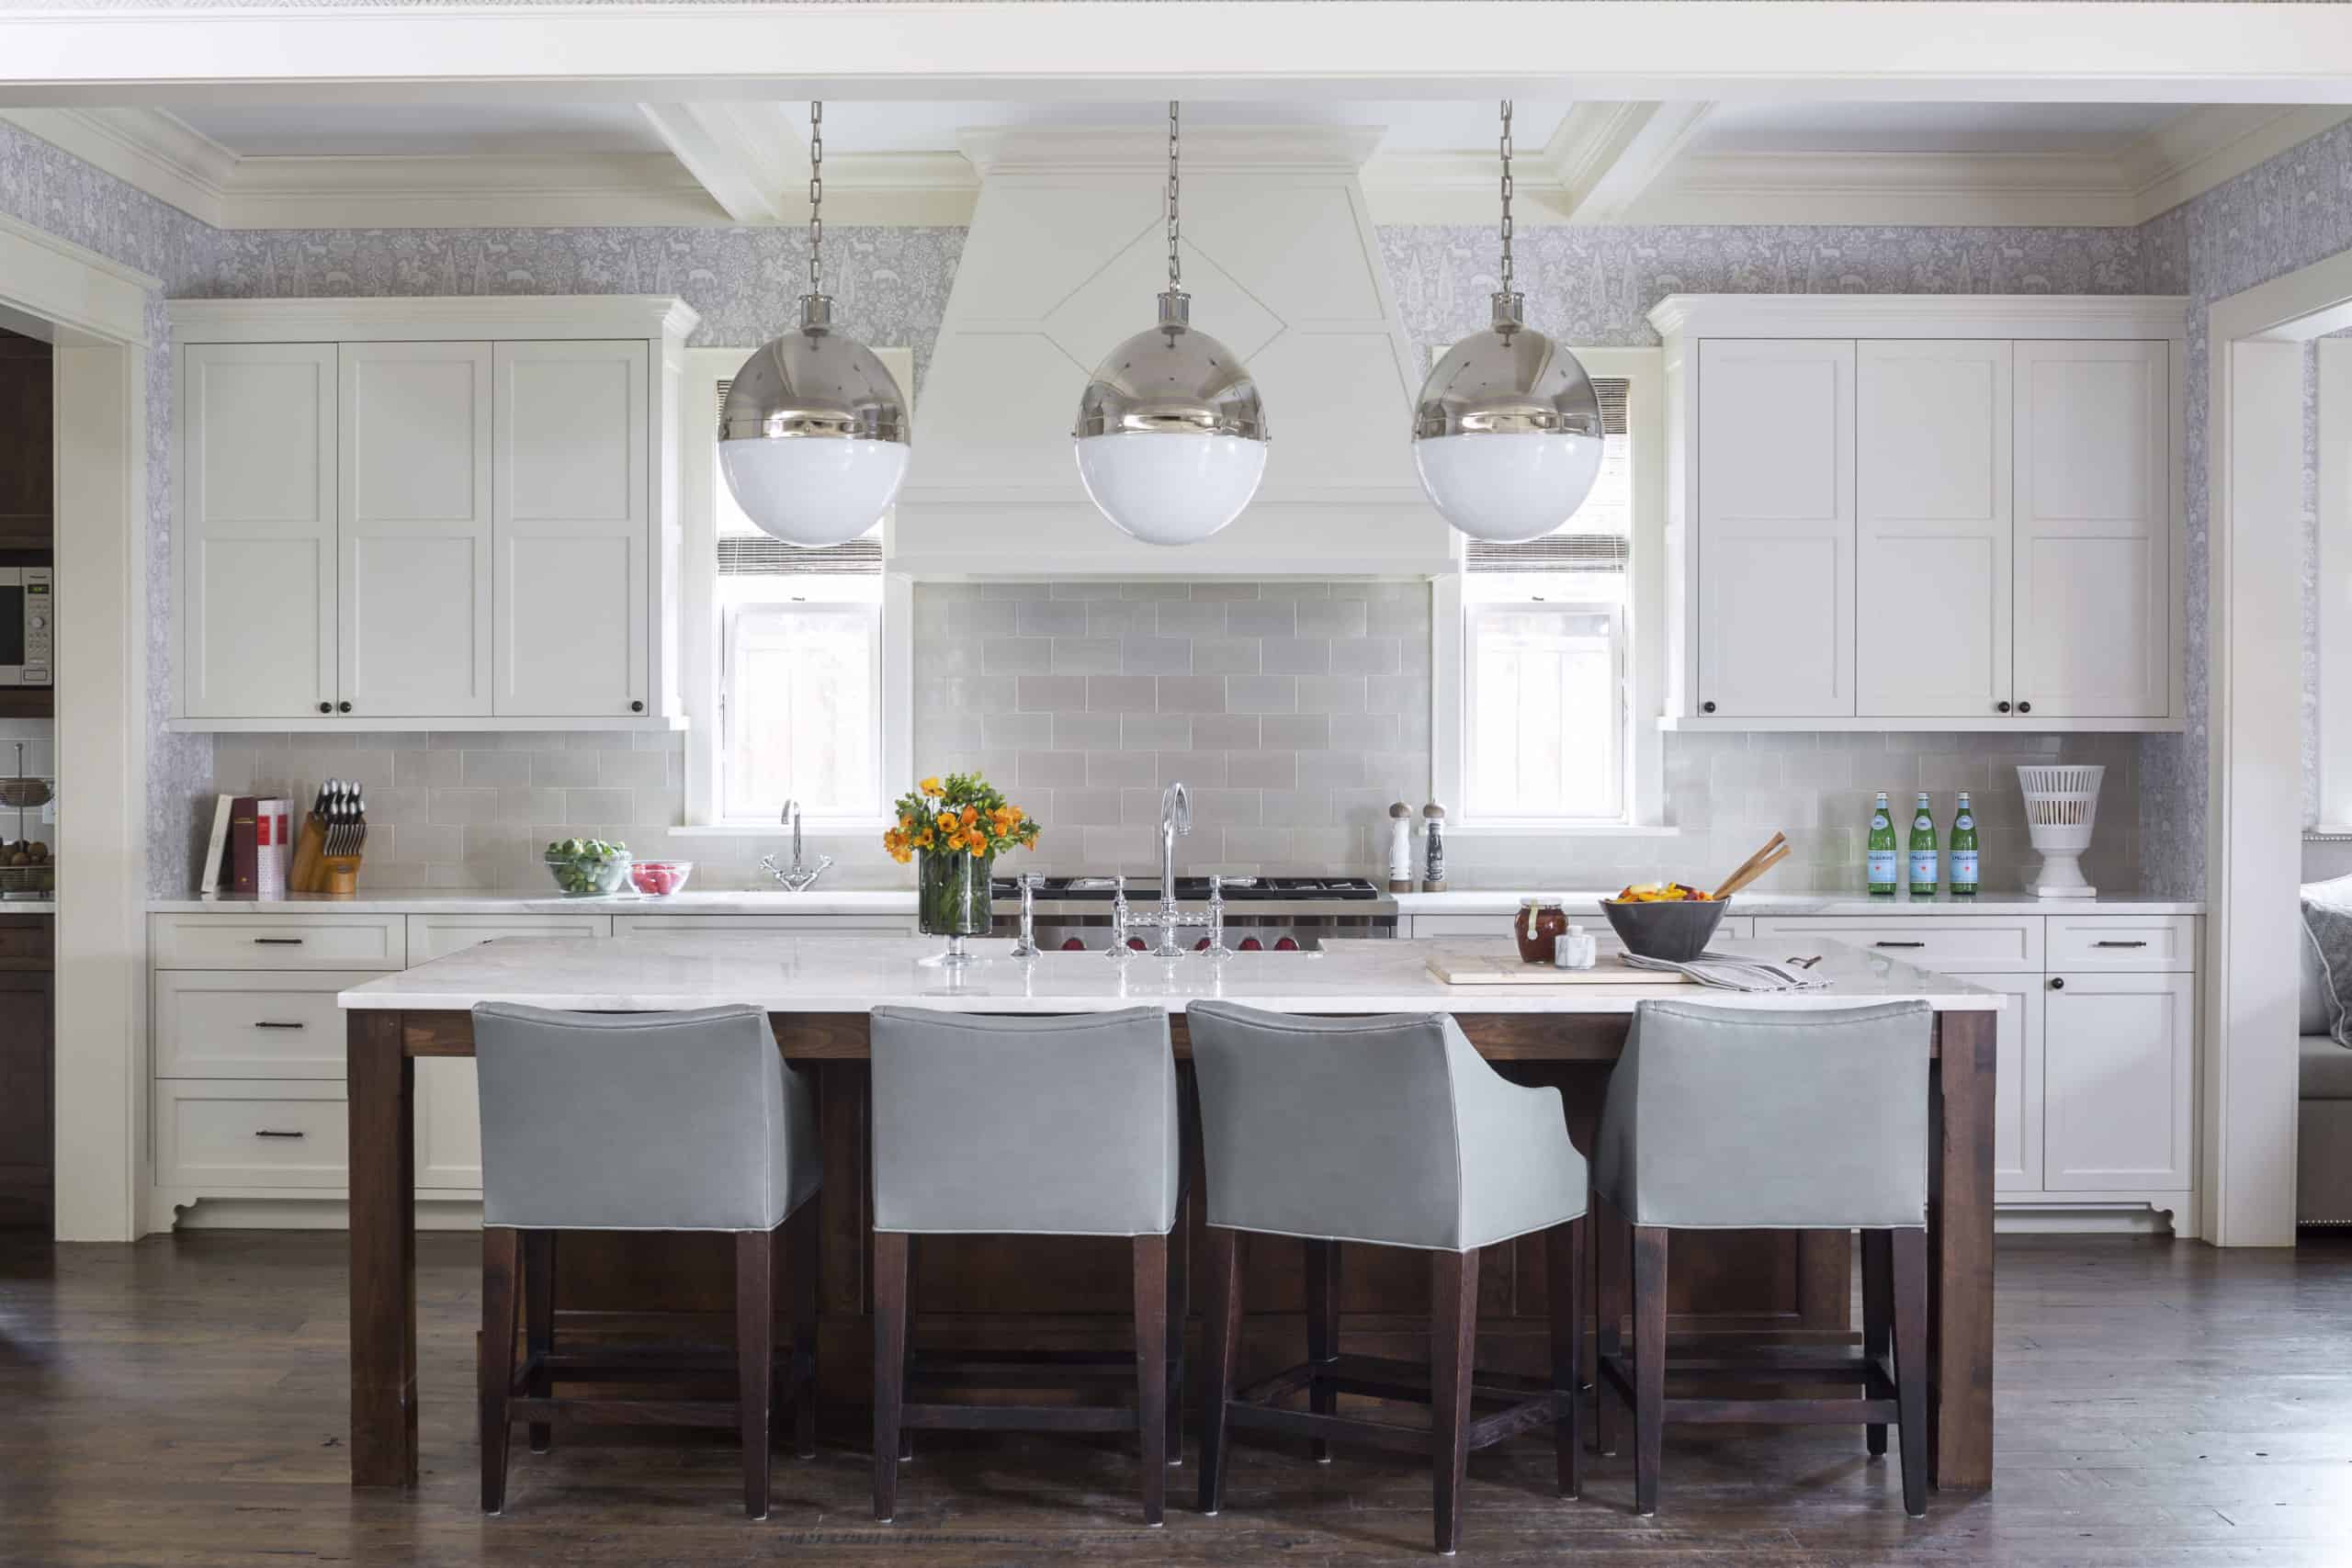 Remodeled Colorado kitchen with modern kitchen design large island pendants